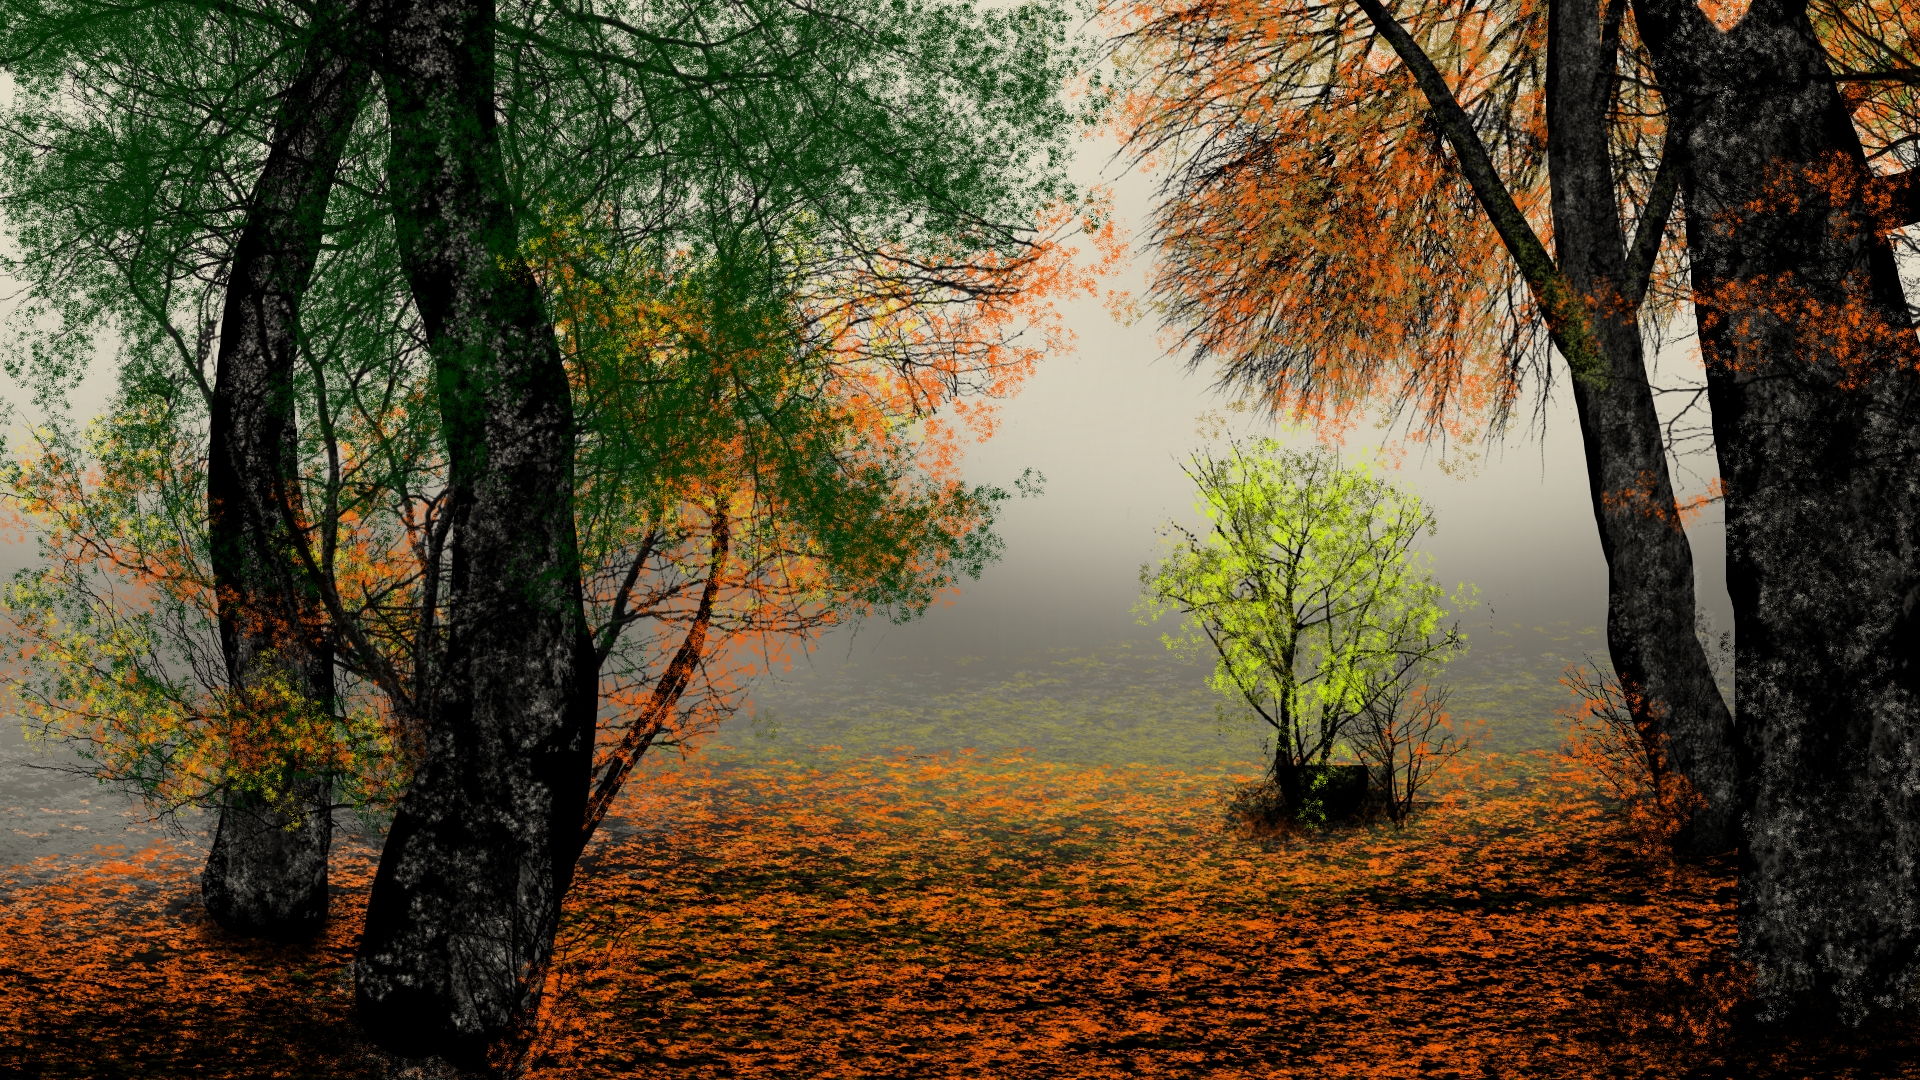 Digital Painting Digital Art Nature Landscape Fall Trees Artwork 1920x1080